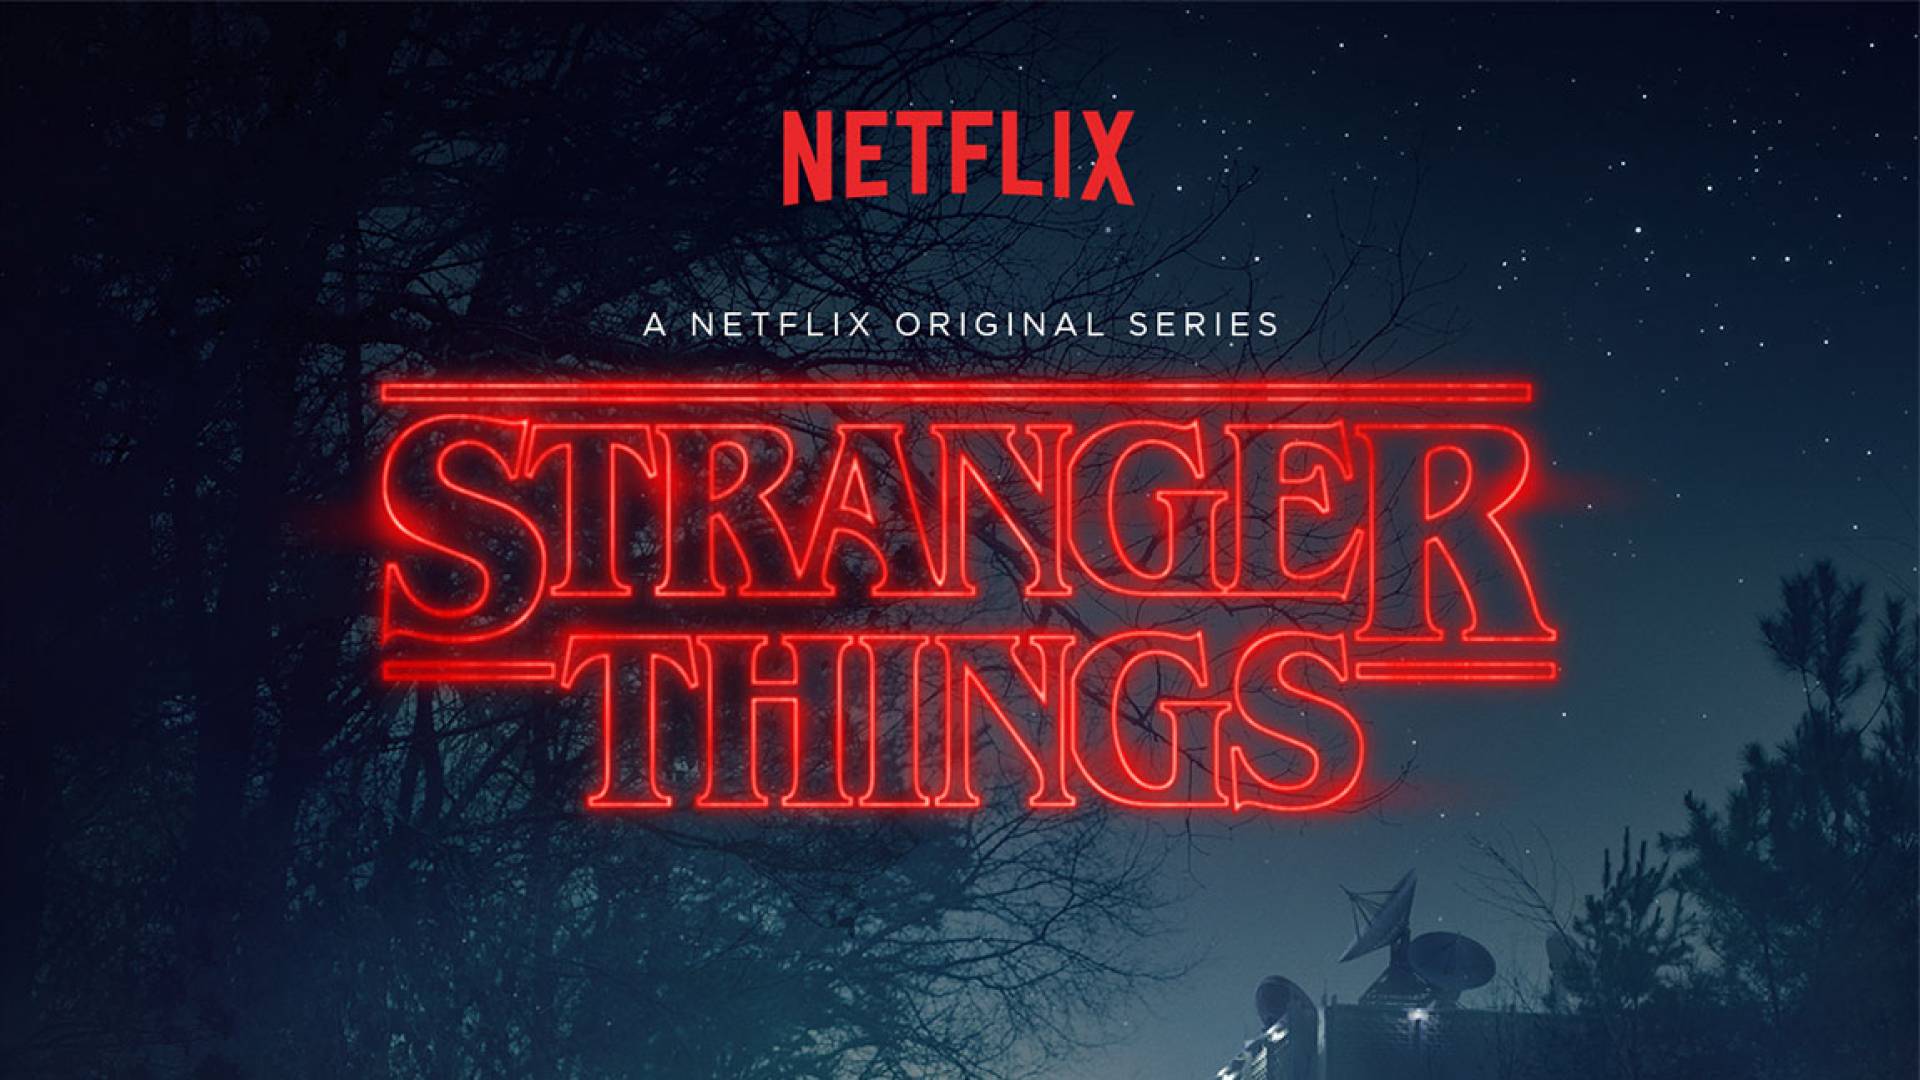 Netflix Stranger Things Desktop Wallpaper Free